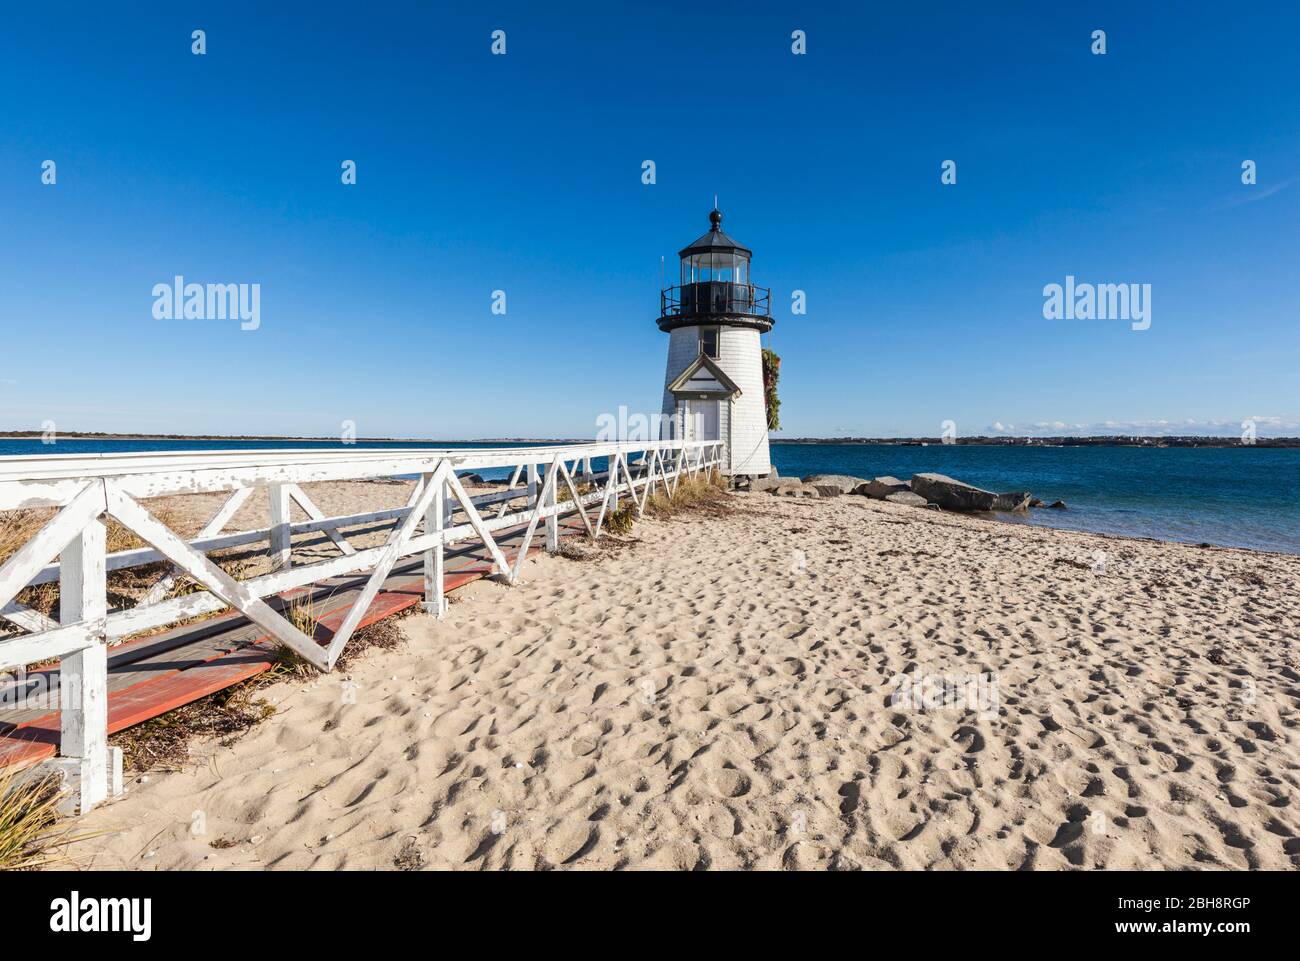 USA, New England, Massachusetts, Nantucket Island, Nantucket Town, Brant Point Lighthouse with a Christmas wreath Stock Photo